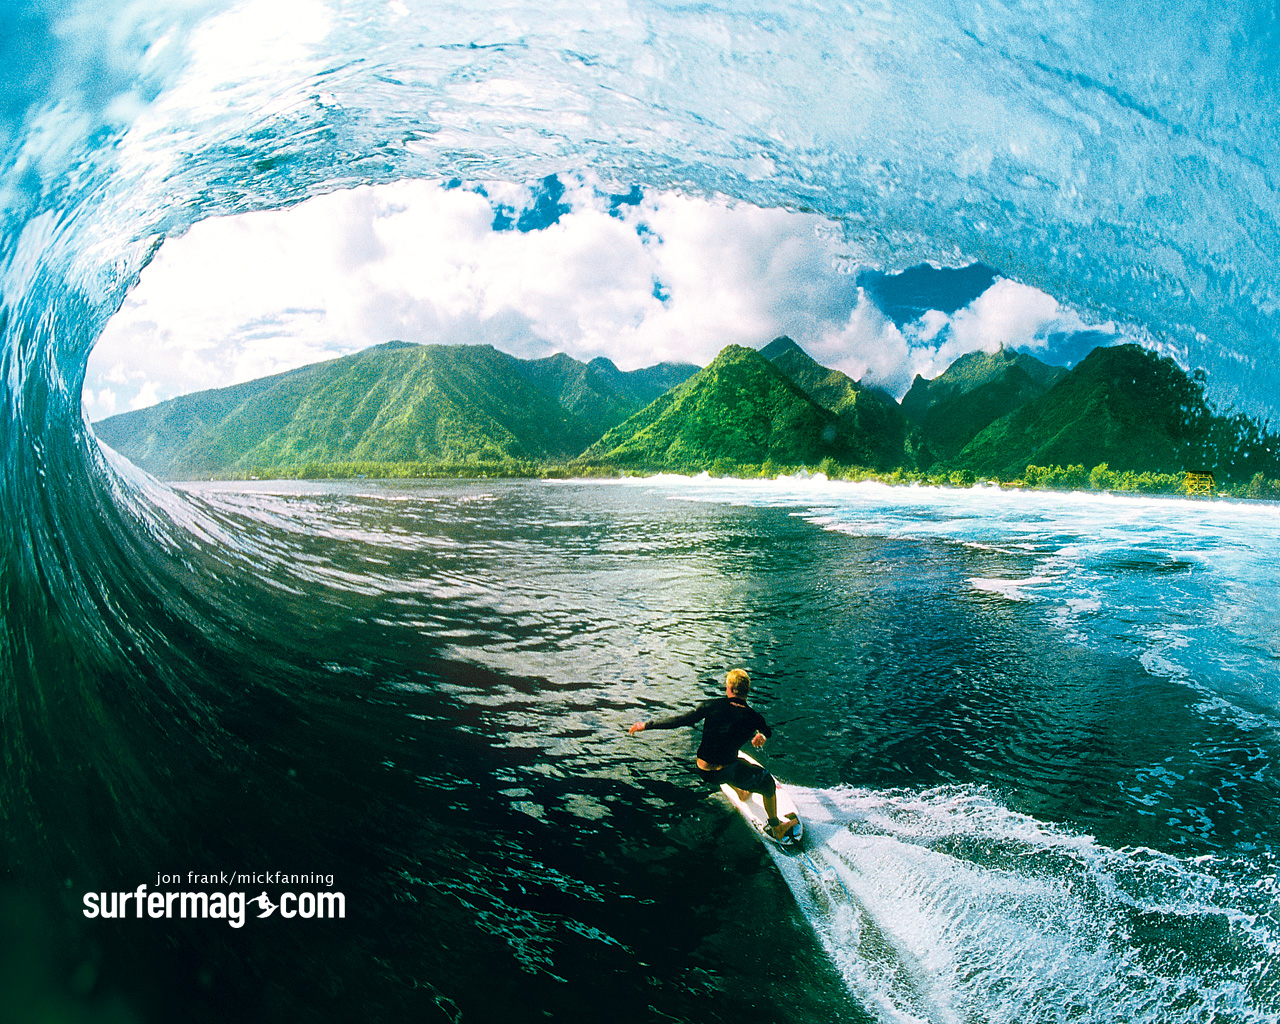 surfing surfingjpg   535778   Free Image Hosting at TurboImageHost